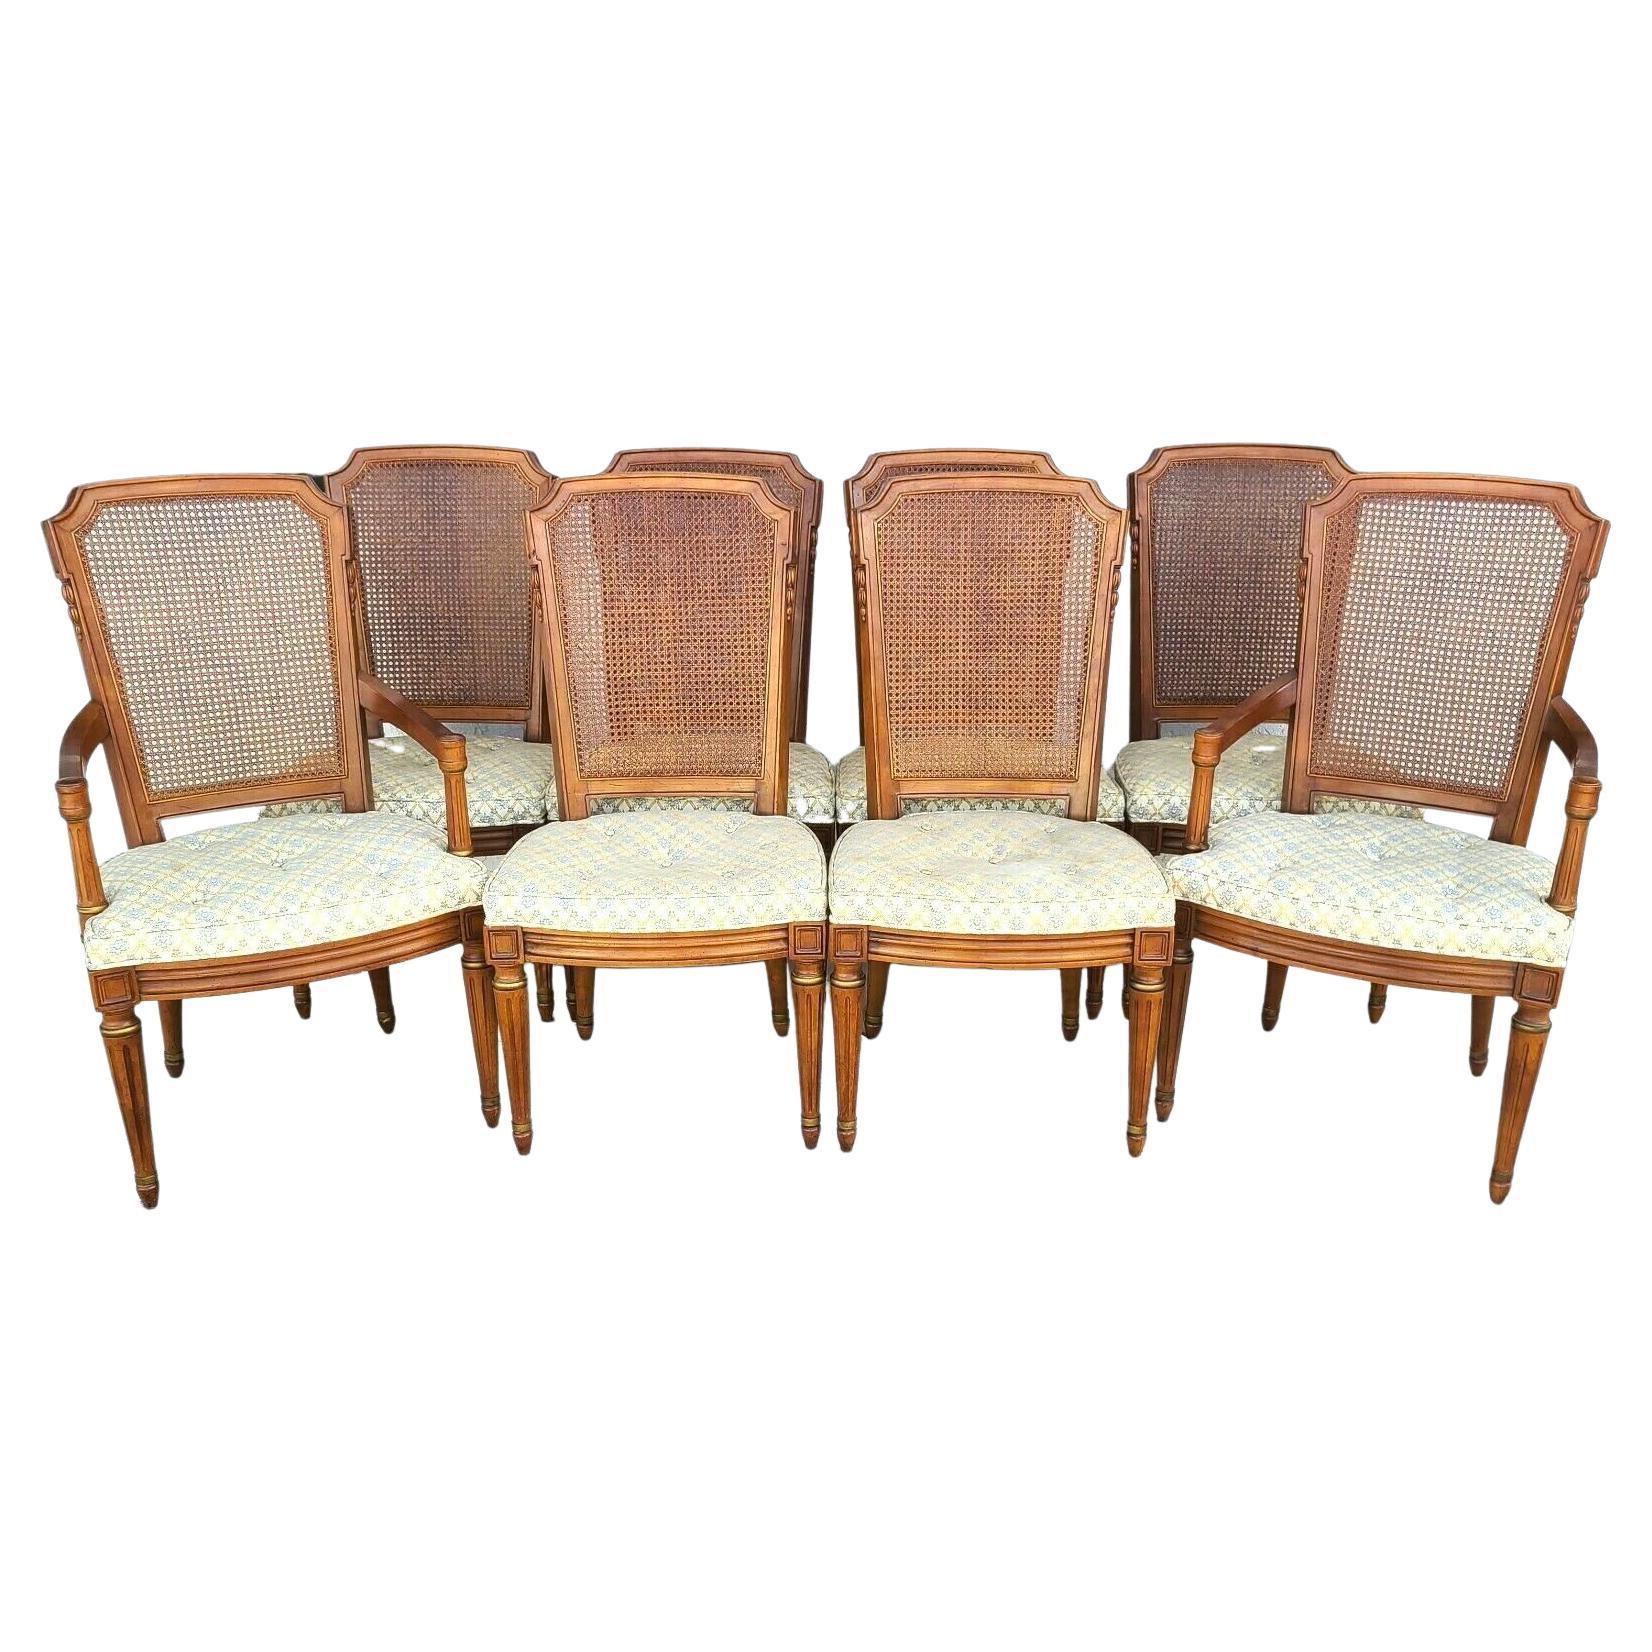 Vintage Henredon Italian Cane Back Dining Chairs - Set of 8